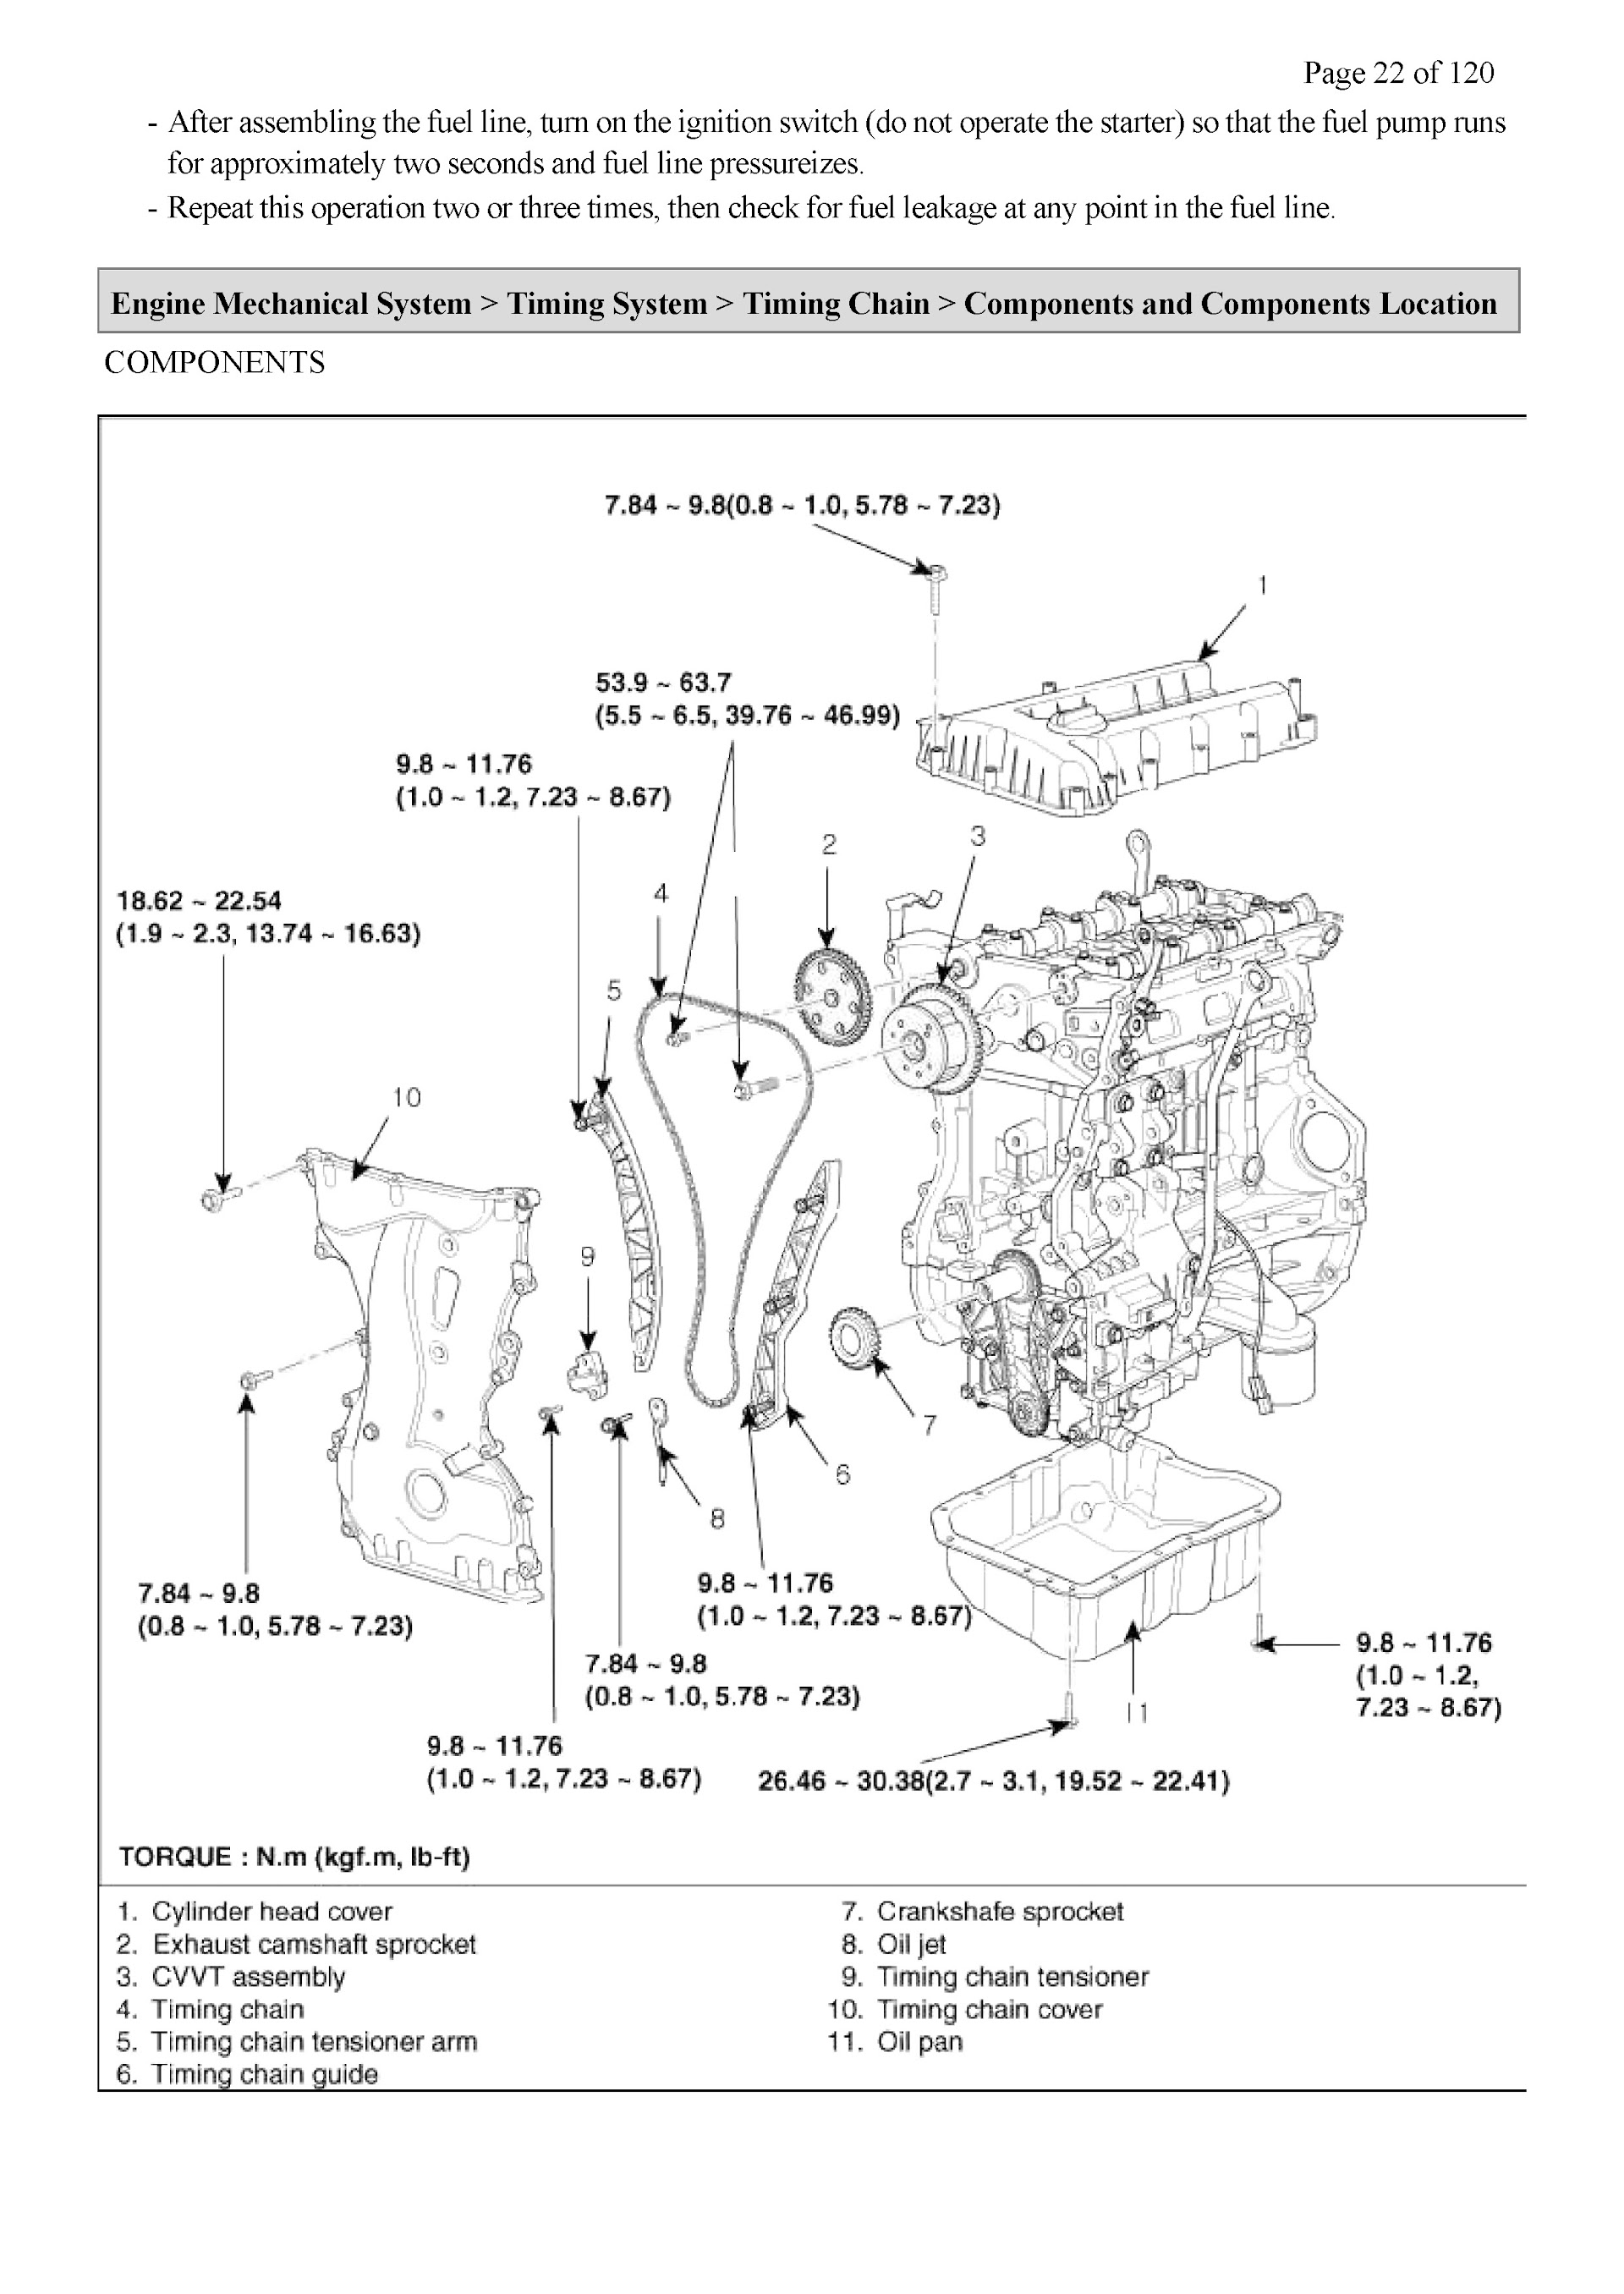 2008 Kia Rondo Repair Manual